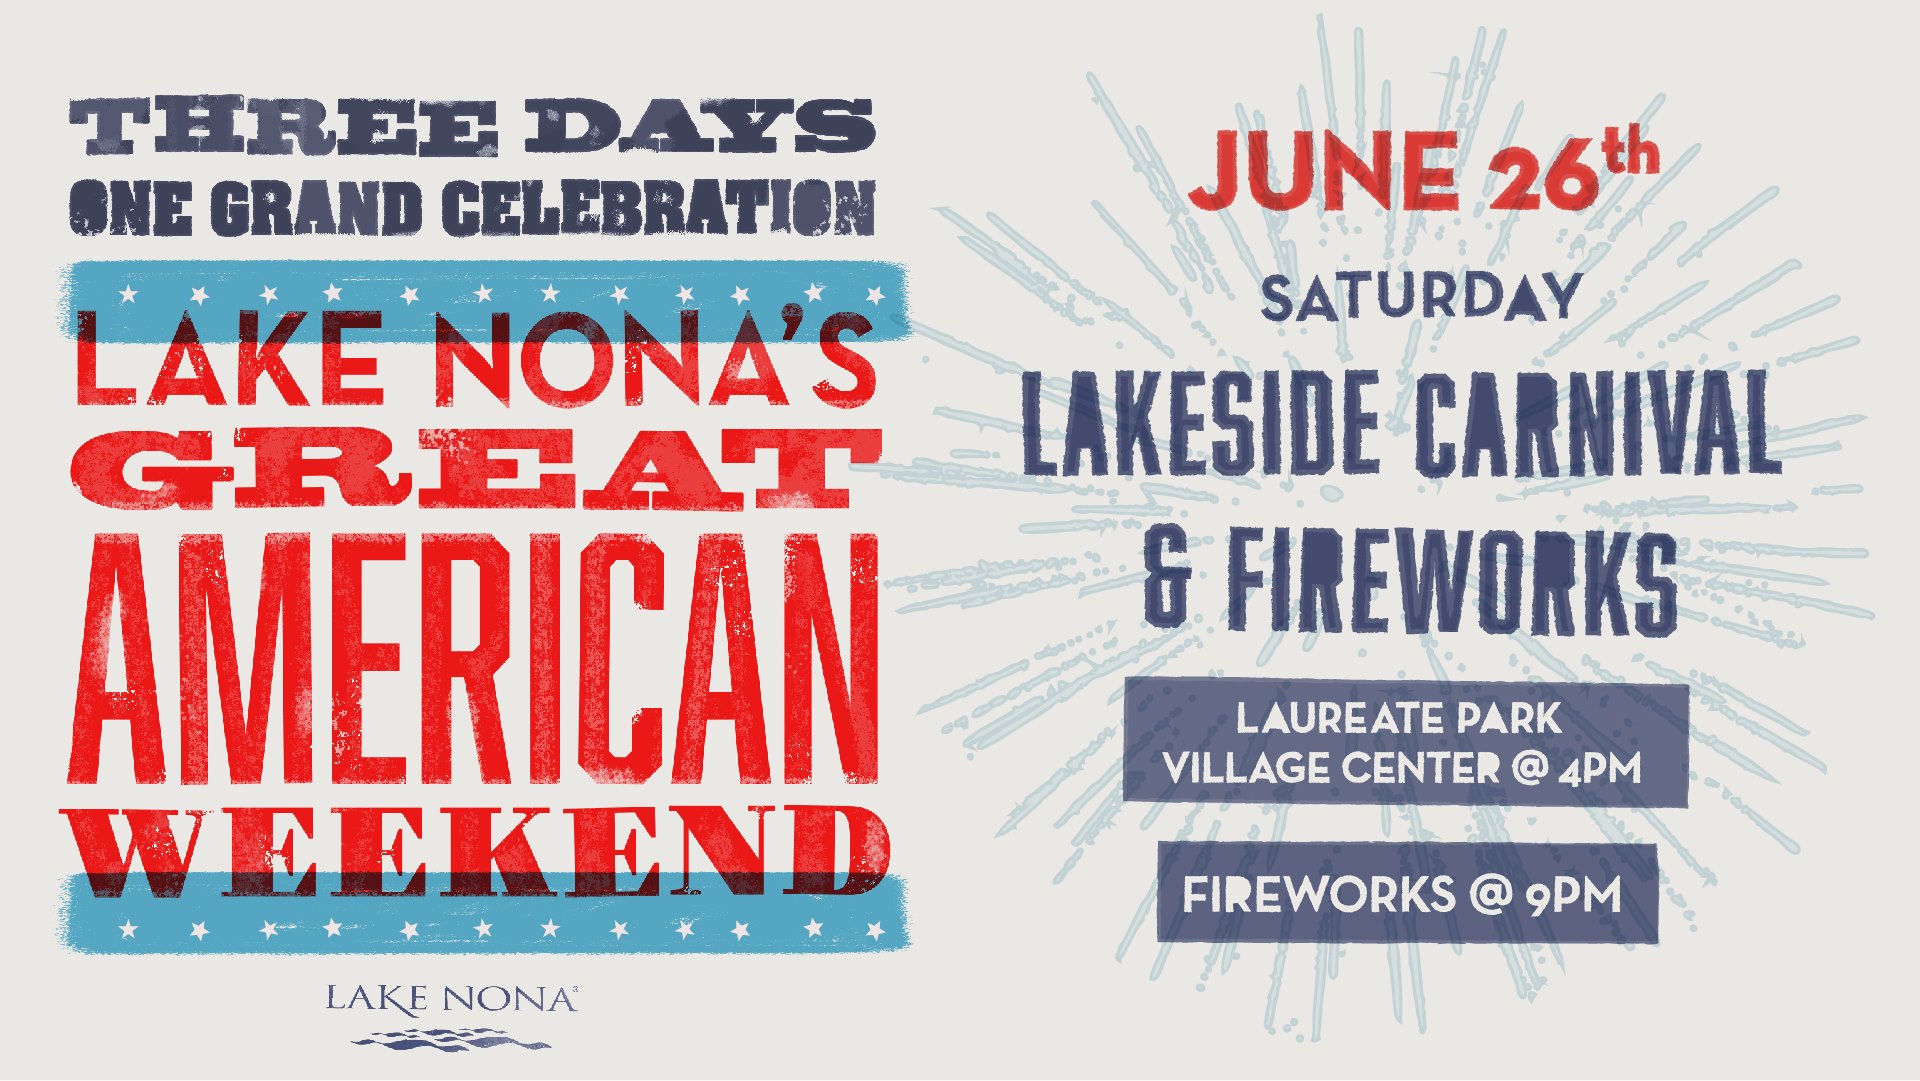 Great American Weekend Lakeside Carnival & Fireworks Bungalower